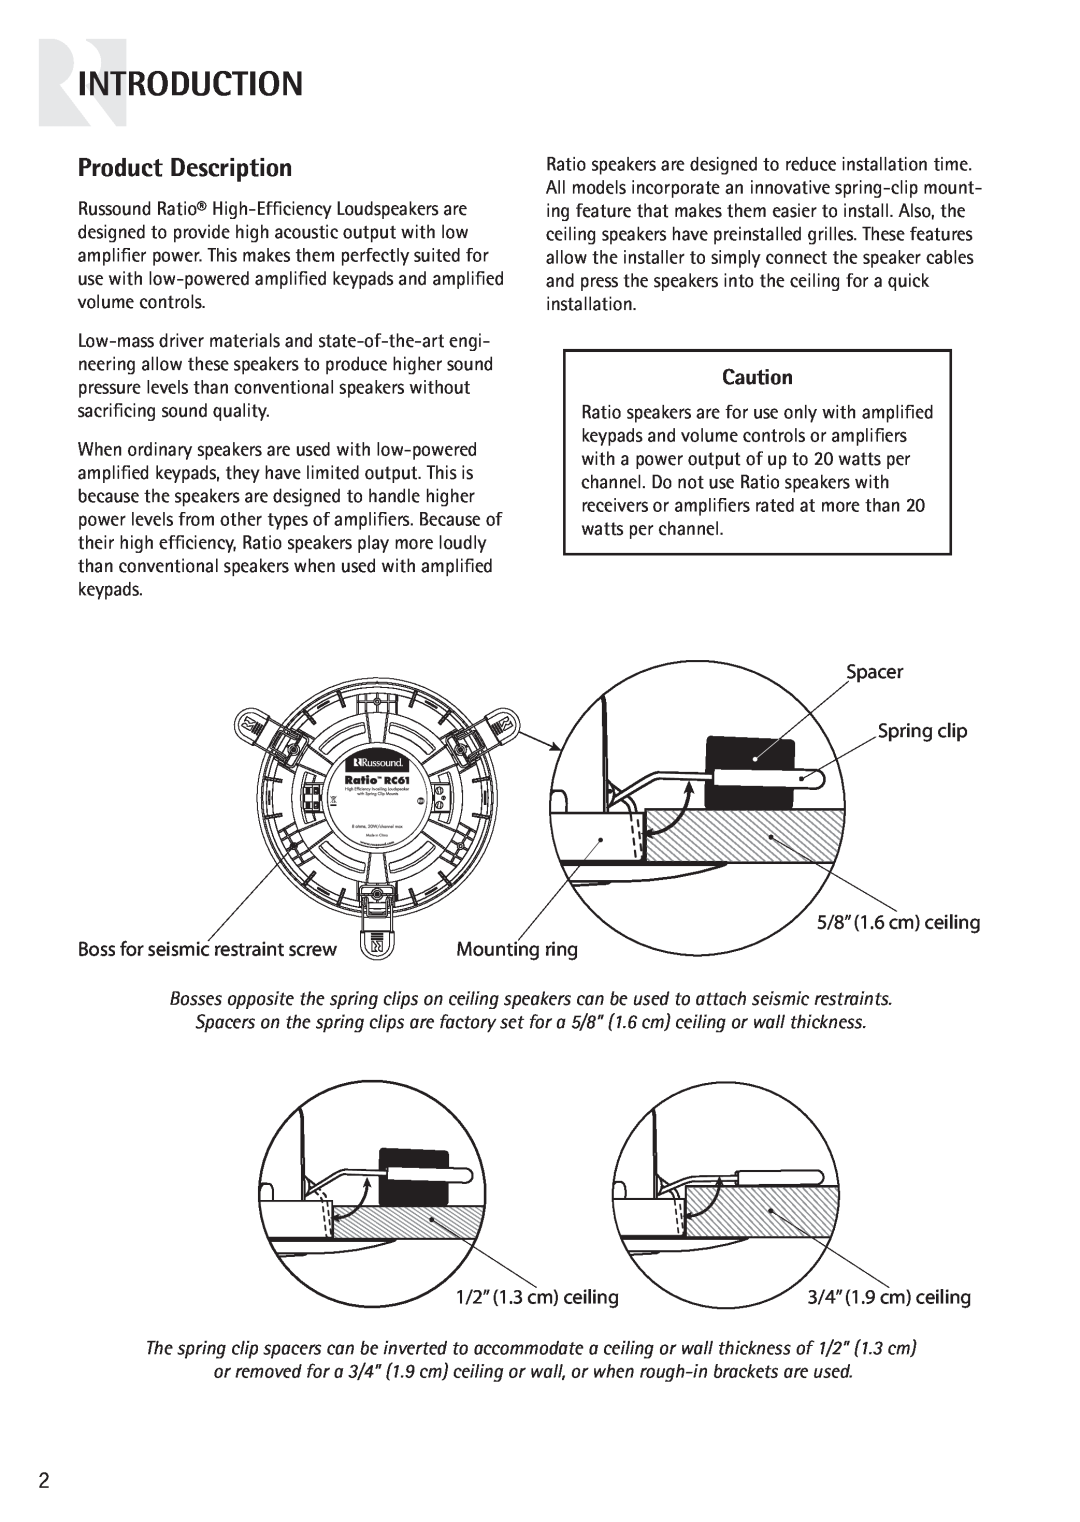 Russound RC61S Introduction, Product Description, Spacer Spring clip, 5/8” 1.6 cm ceiling, 1/2” 1.3 cm ceiling 